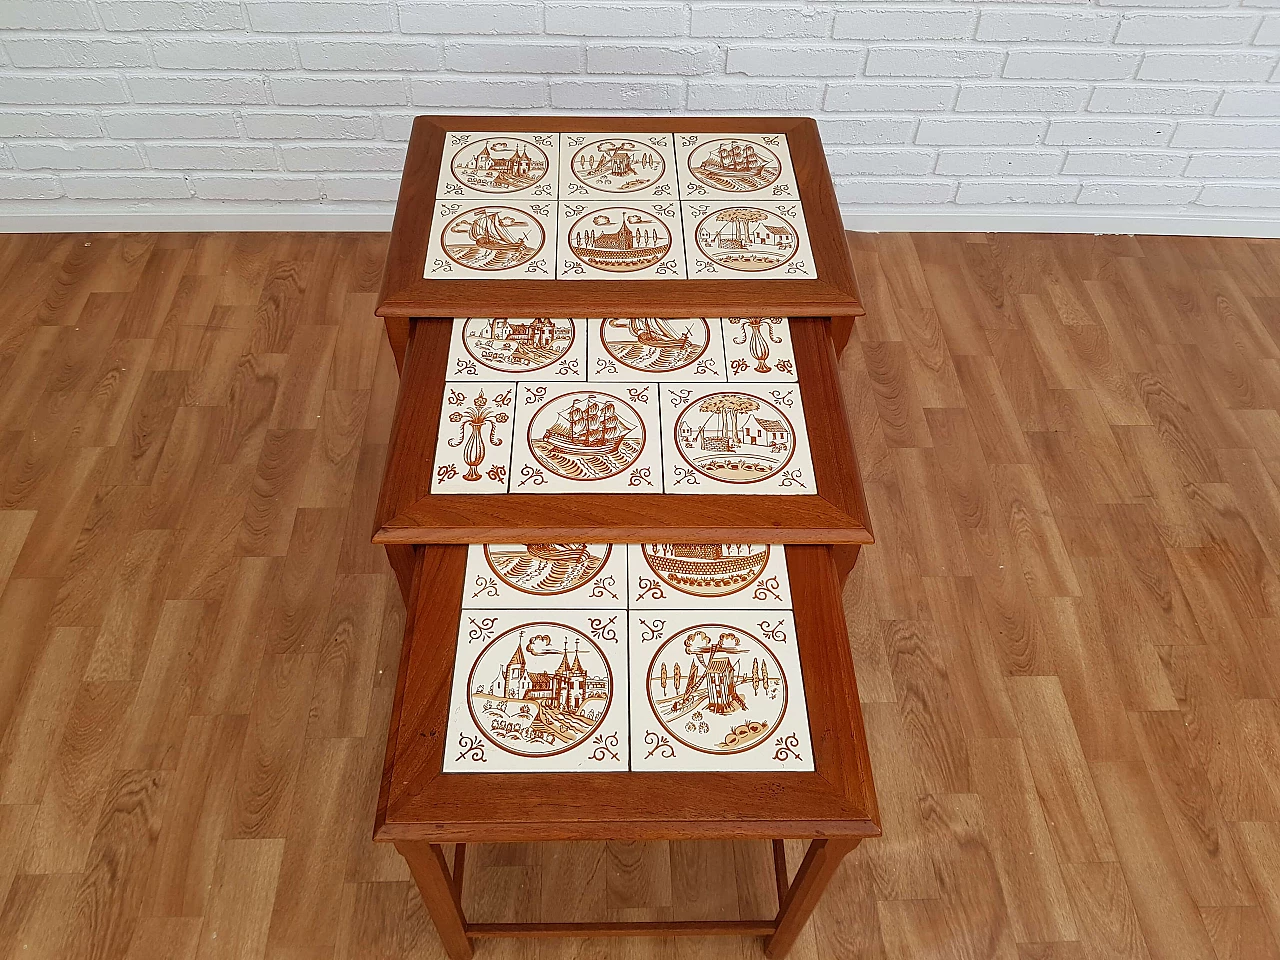 Nesting table, 60s, danish design, hand-painted ceramic tiles, teak wood 1064957